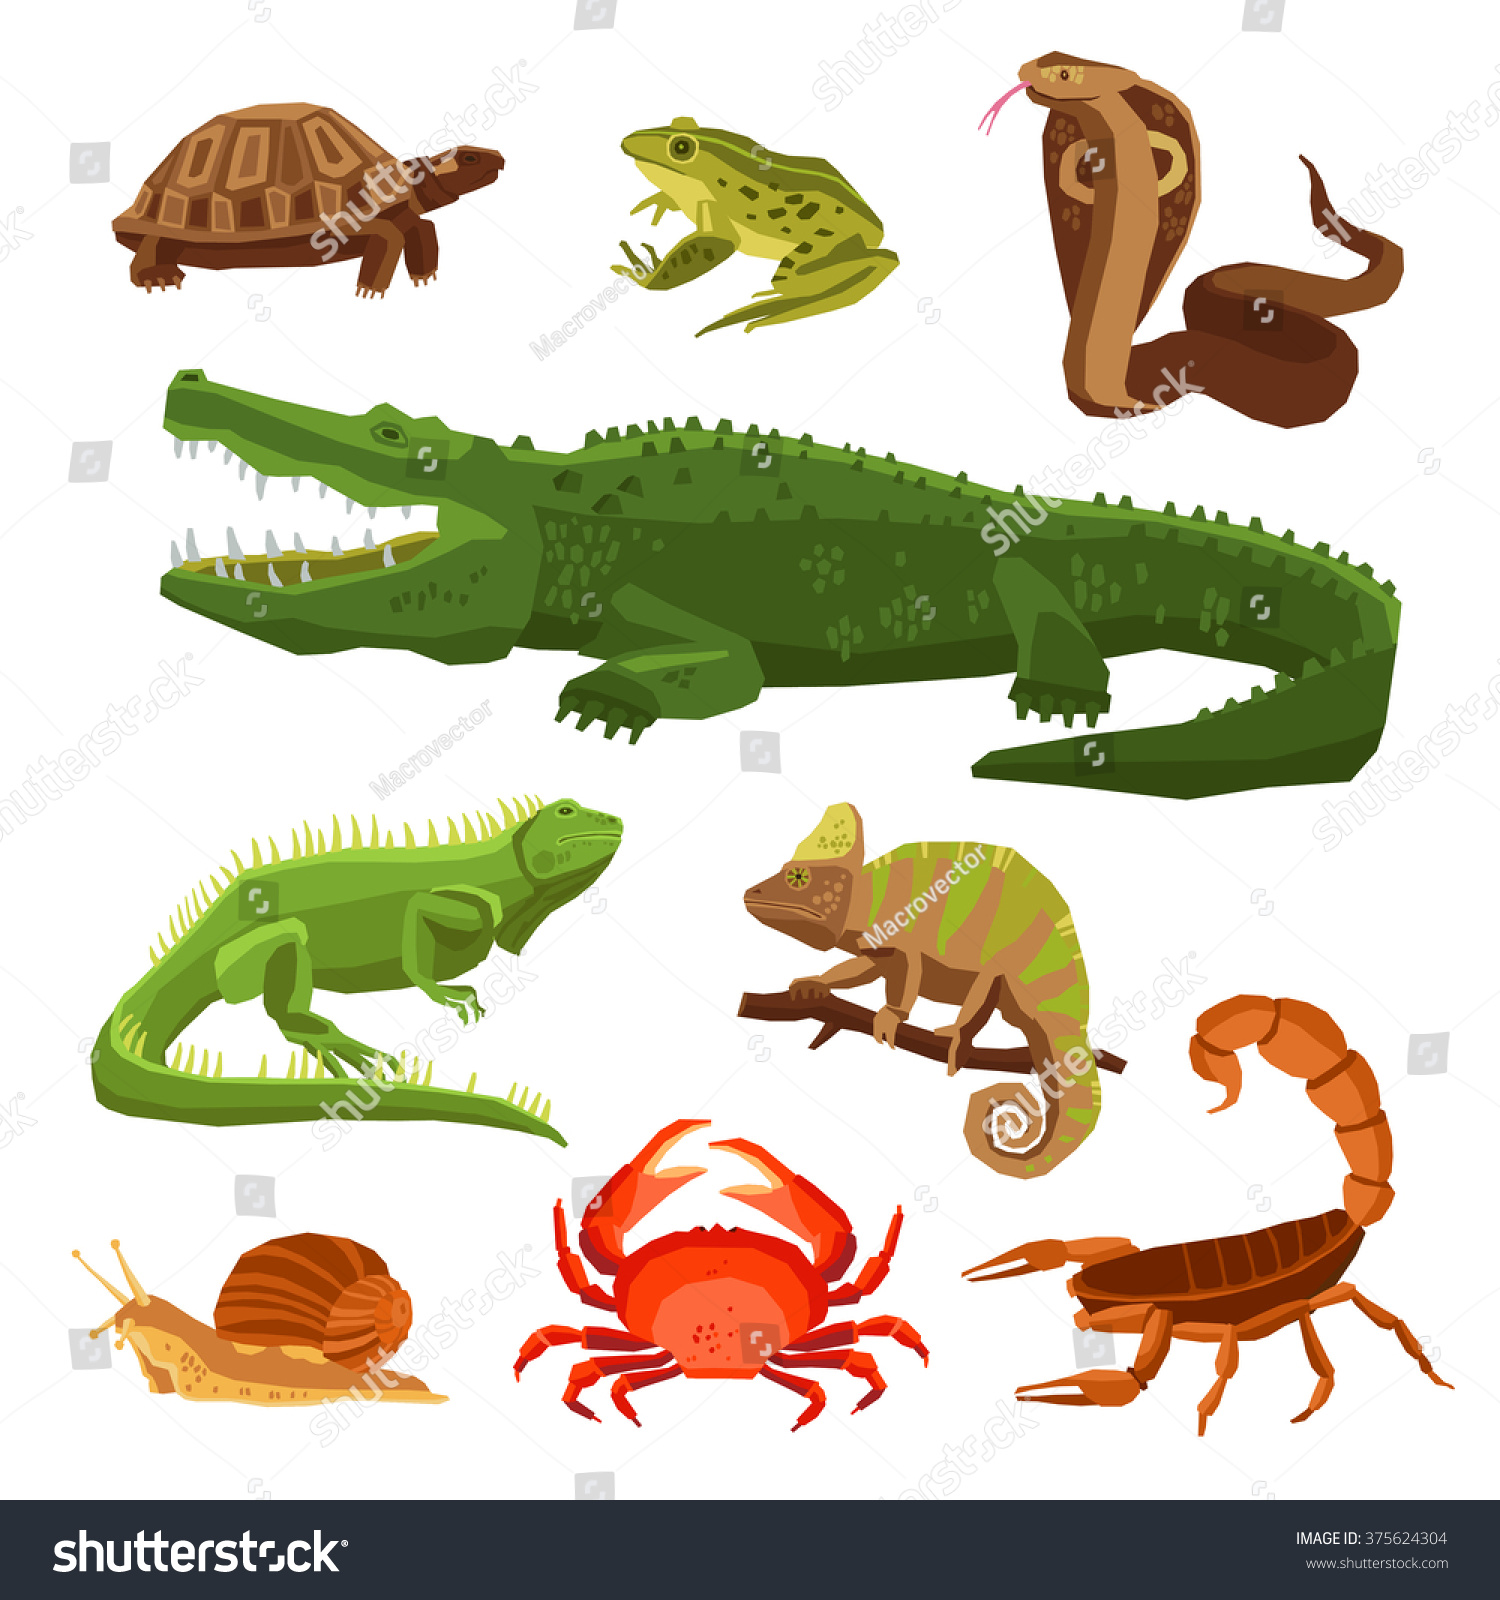 crocodile reptile or amphibian